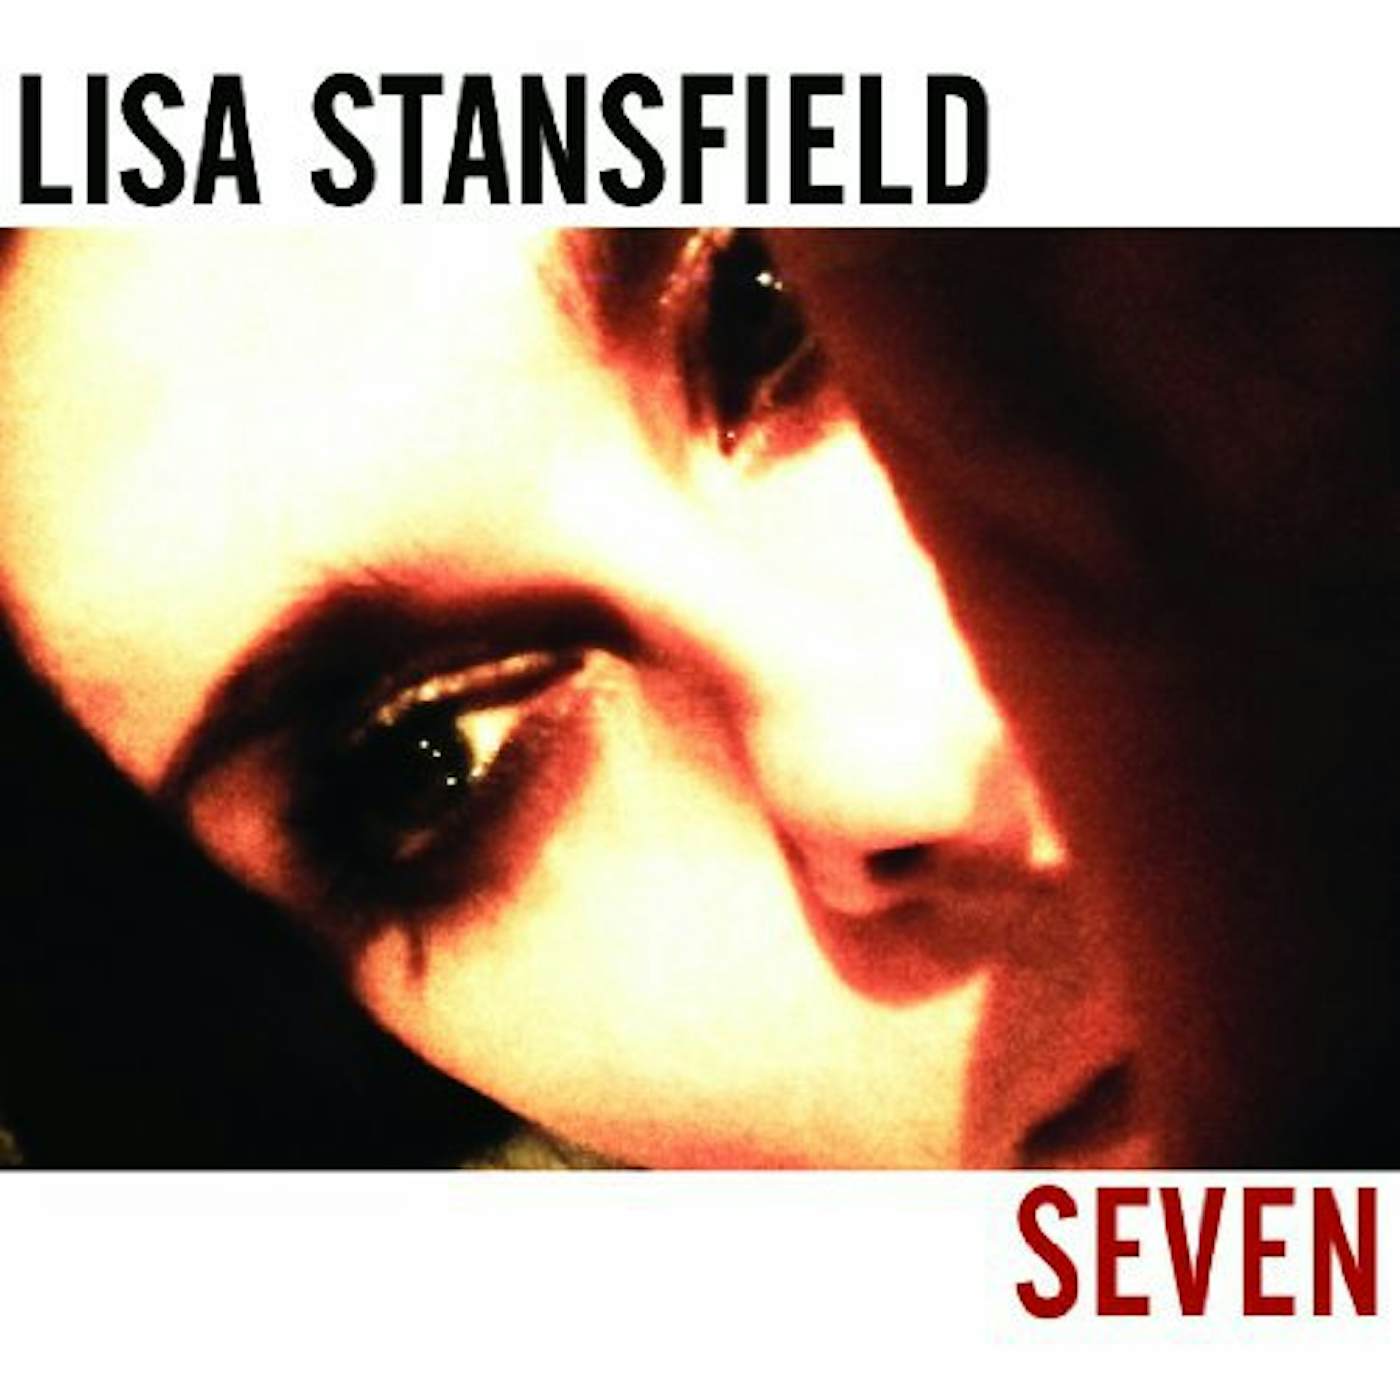 Lisa Stansfield SEVEN Vinyl Record - UK Release